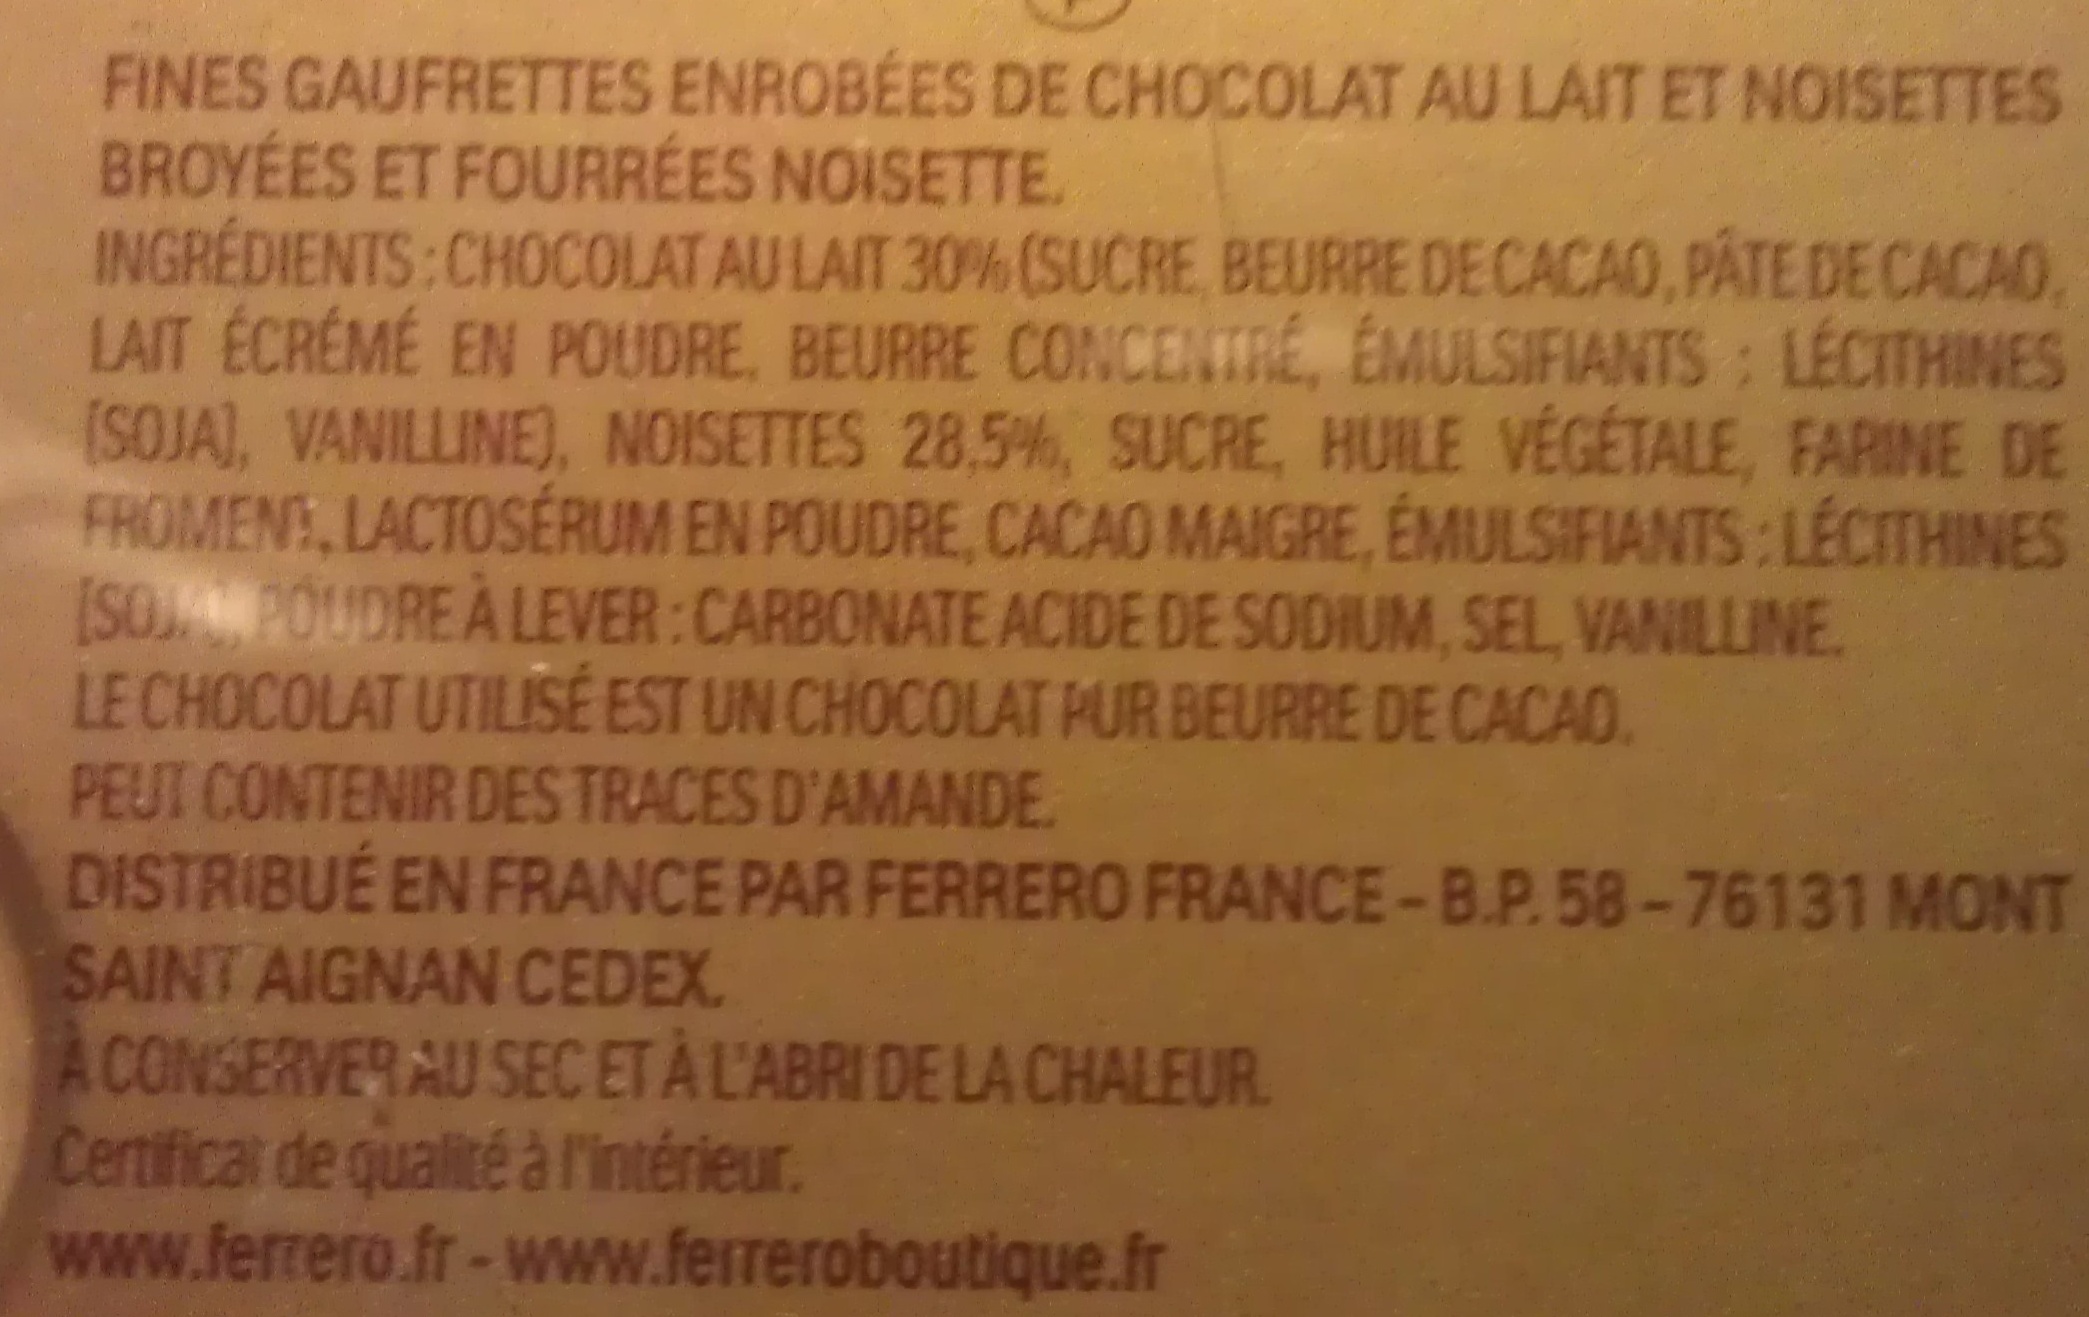 Ferrero Rocher - Fines gaufrettes enrobées de chocolat - Ingredienti - fr